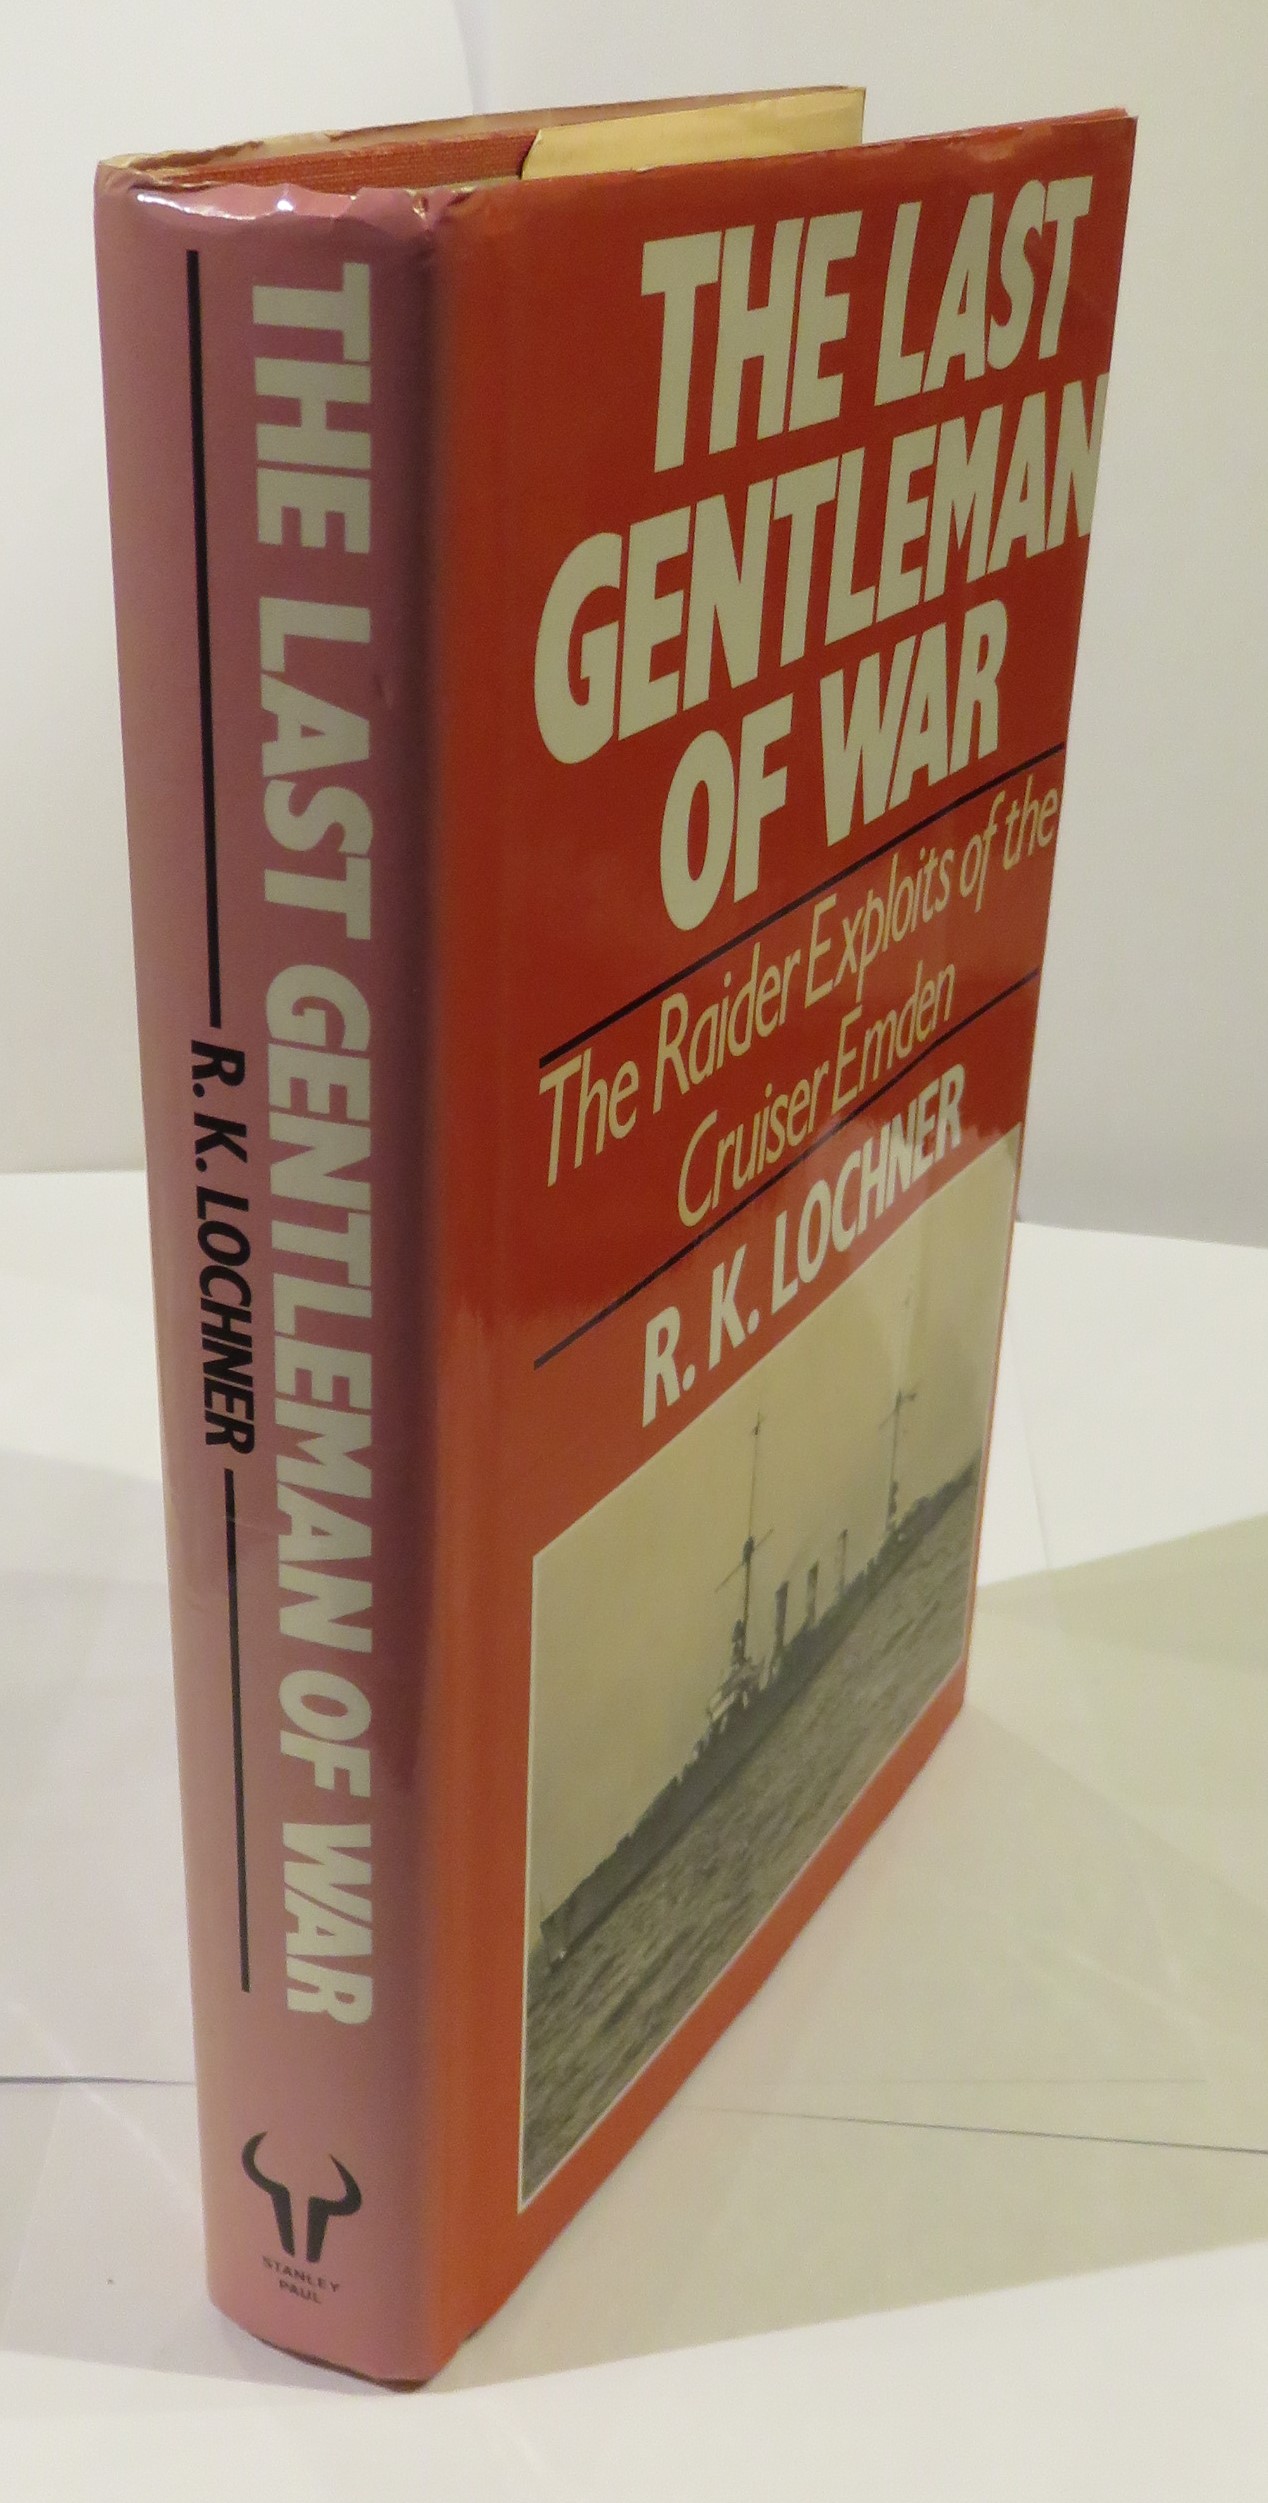 The Last Gentleman of War: The Raider Exploits of the Cruiser Emden 